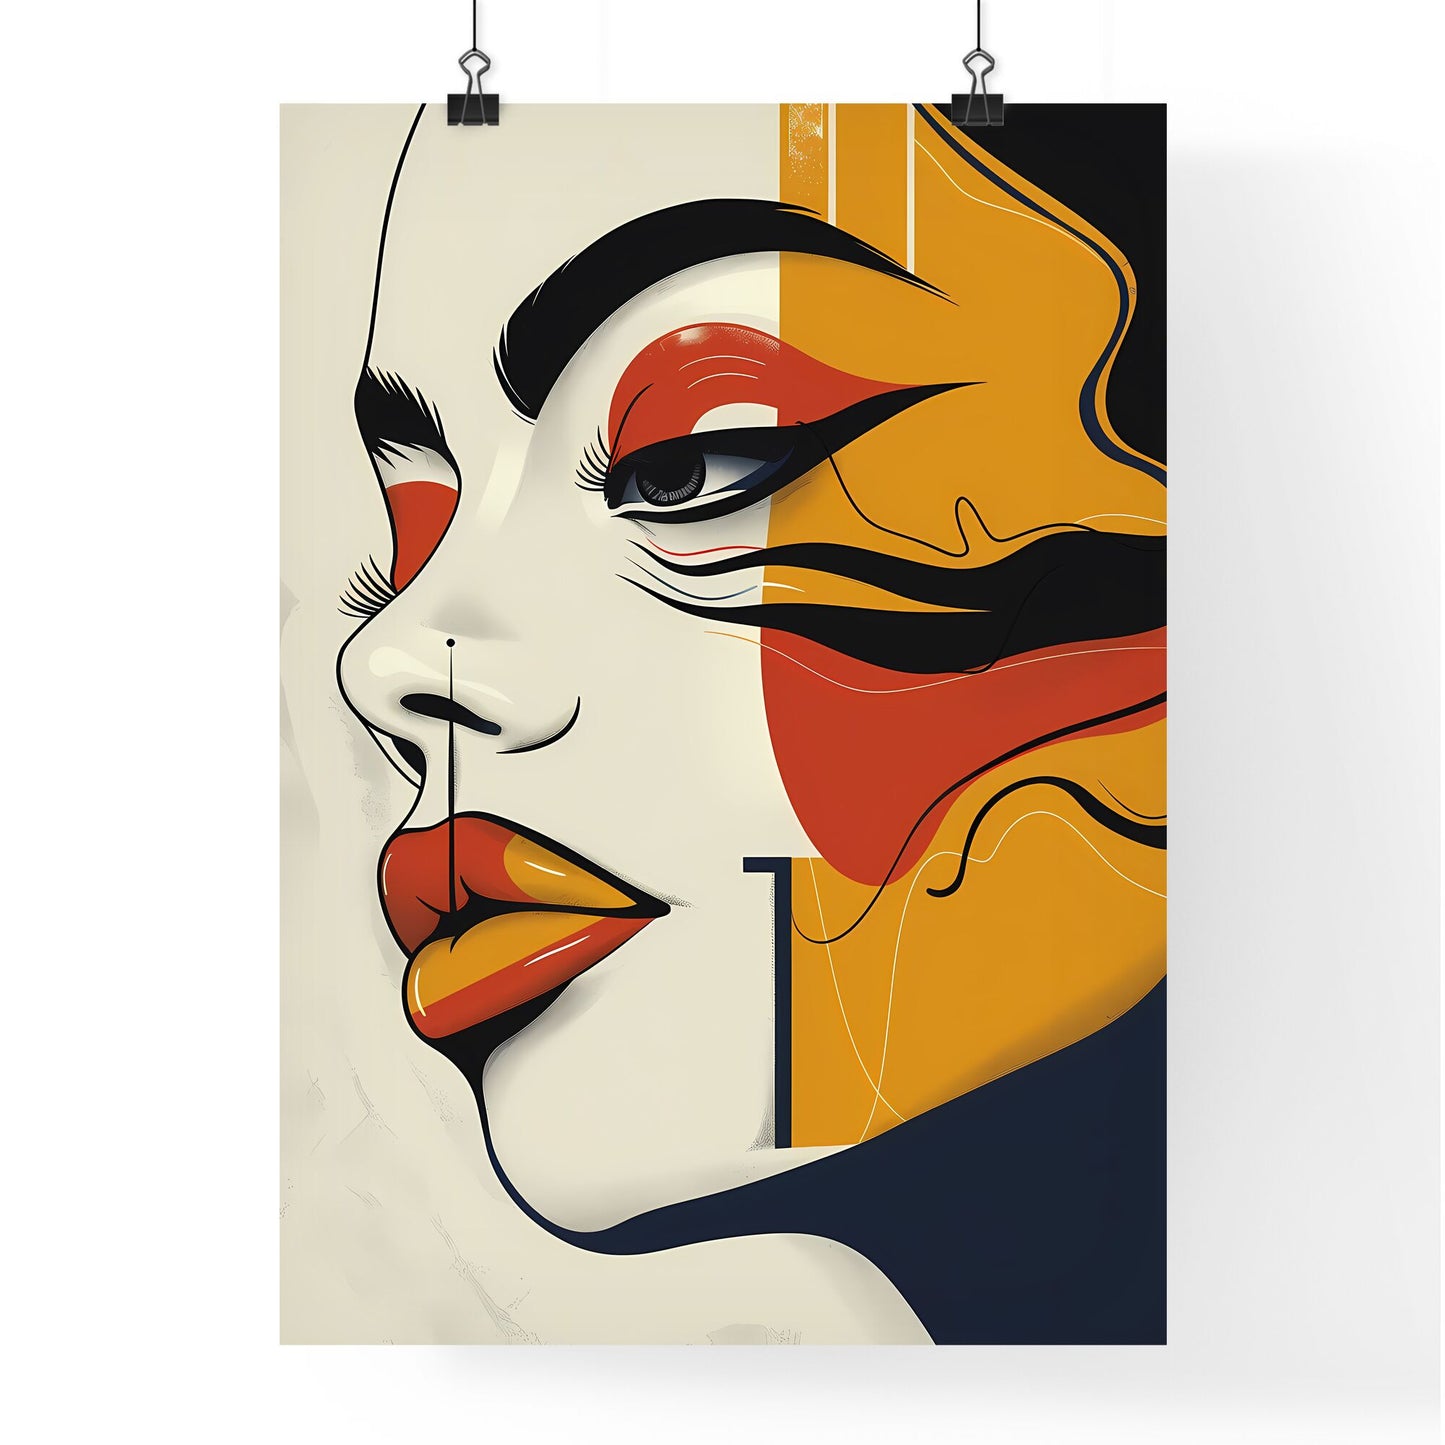 Travel poster: Alphabet drawing of womans face, modern, vibrant colors, simplistic shapes, focus on art aspect - a captivating masterpiece! Default Title